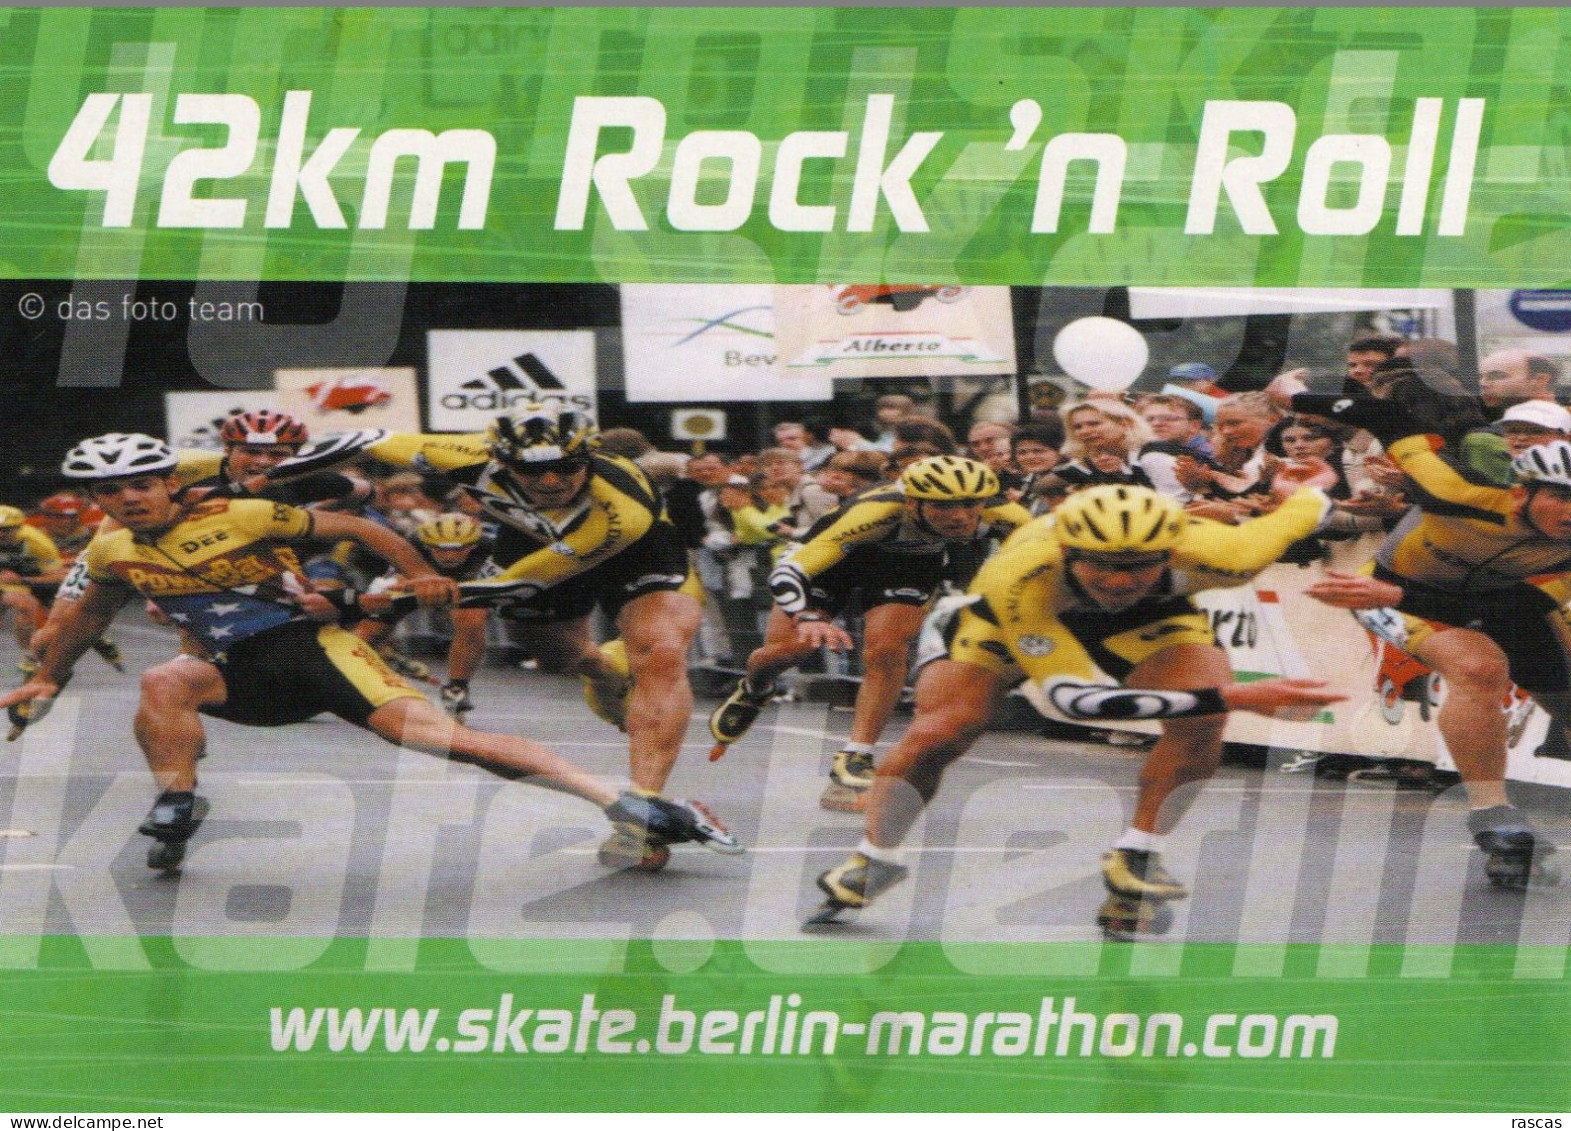 CLB - CPM - ROLLER - SKATE BERLIN MARATHON - 42 KM ROCK 'N ROLL - Leichtathletik